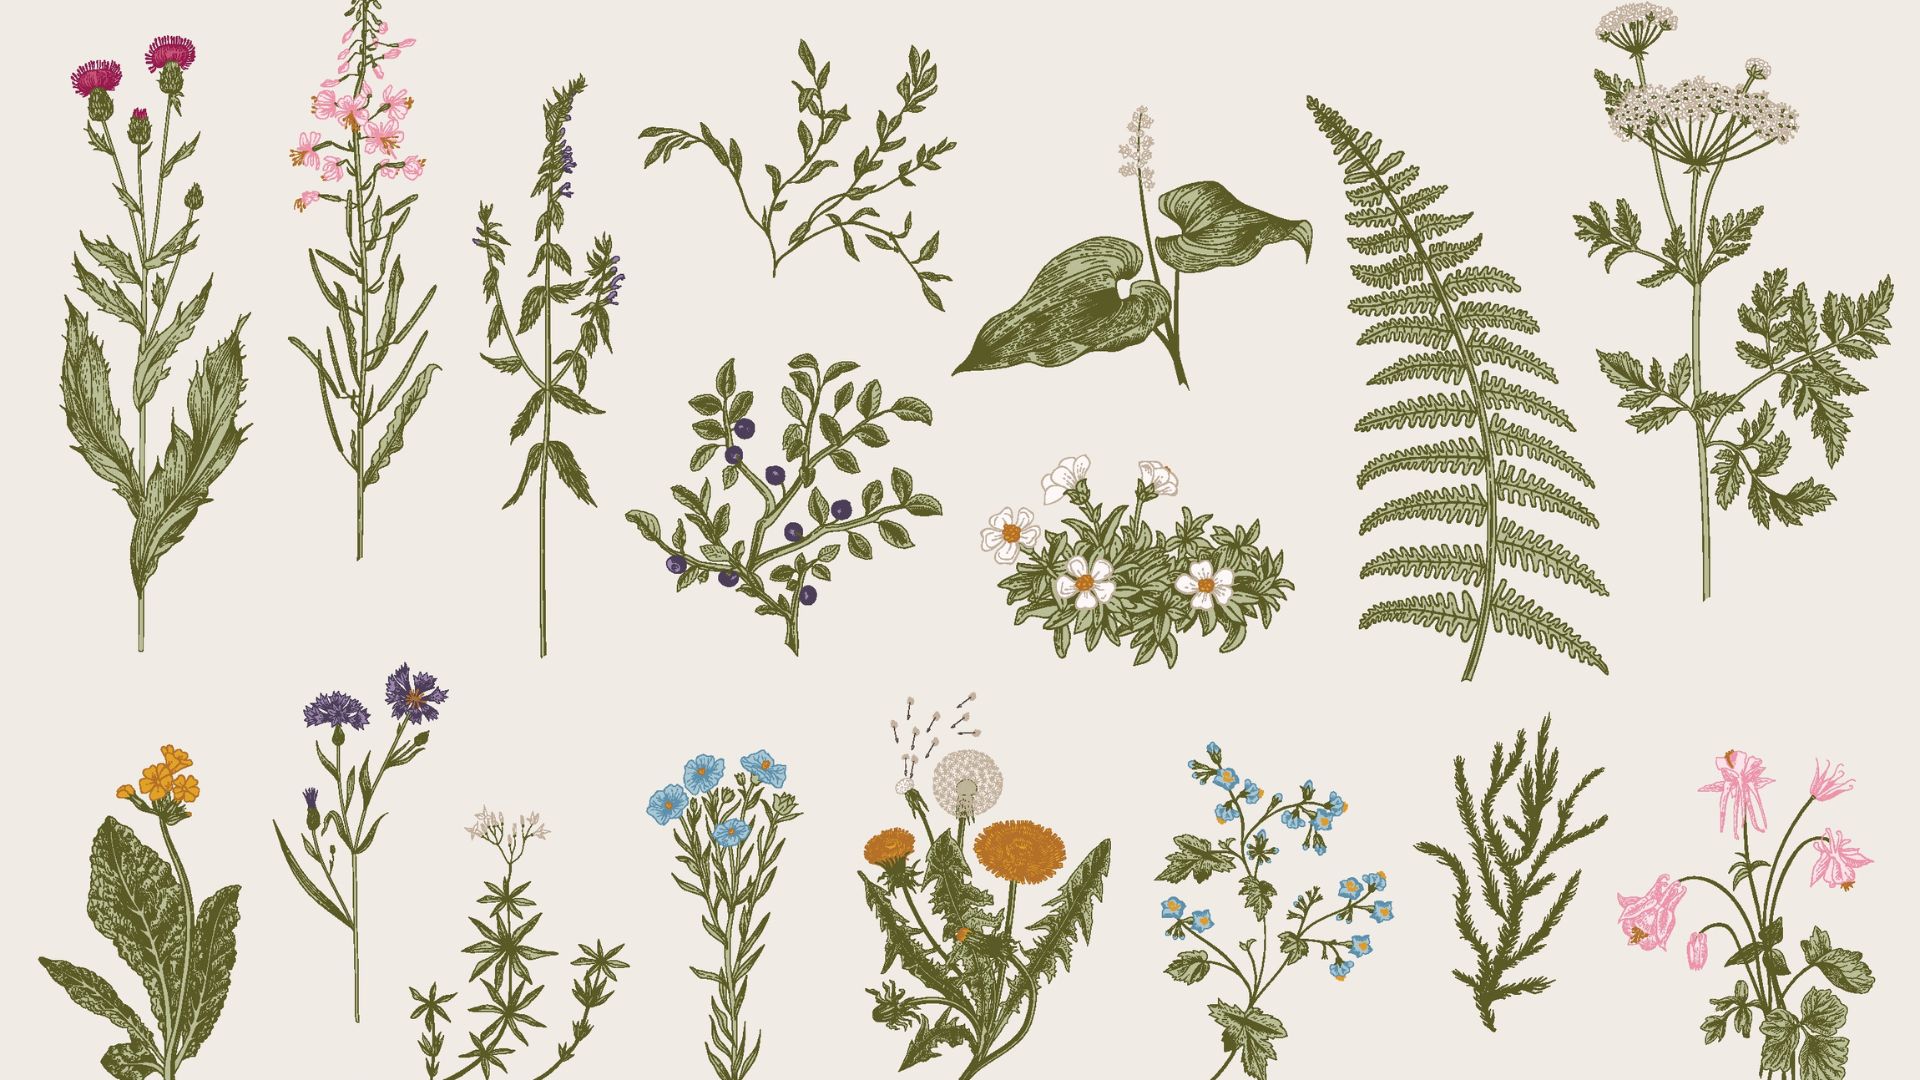 Botanical art illustrations